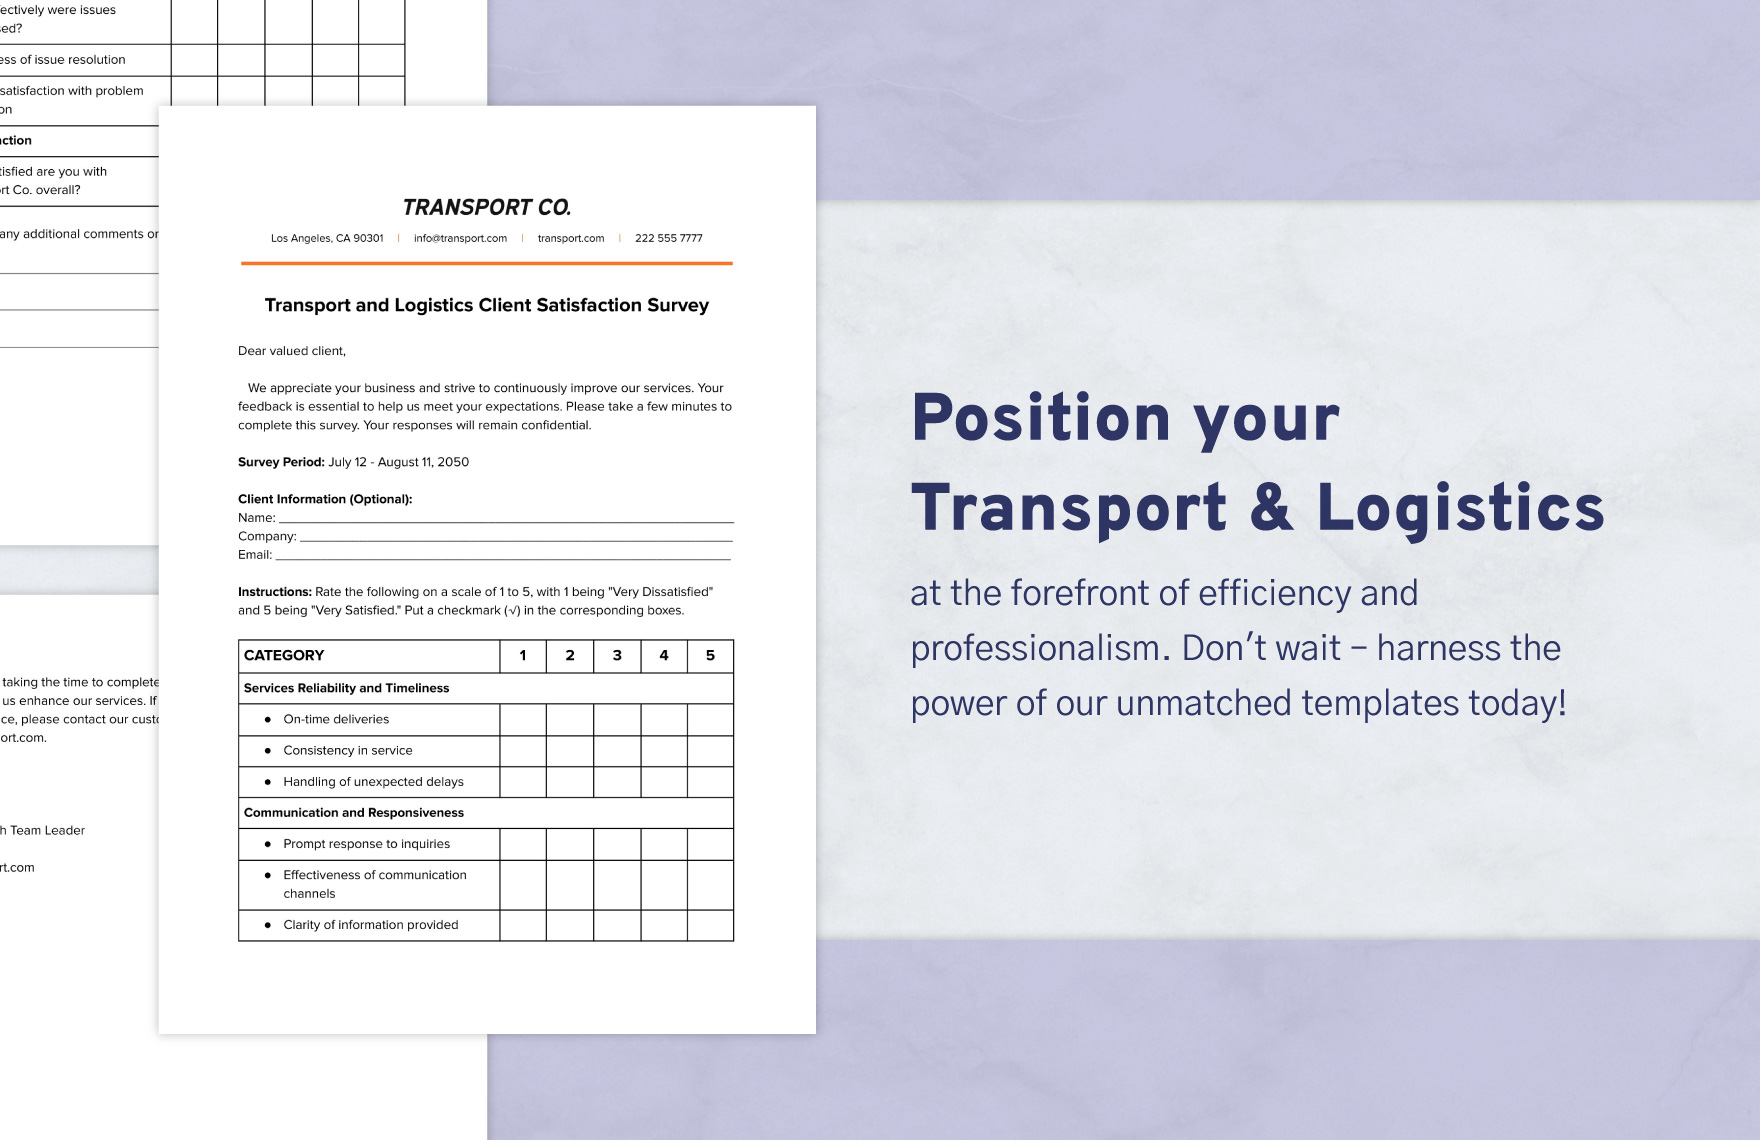 Transport and Logistics Client Satisfaction Survey Template